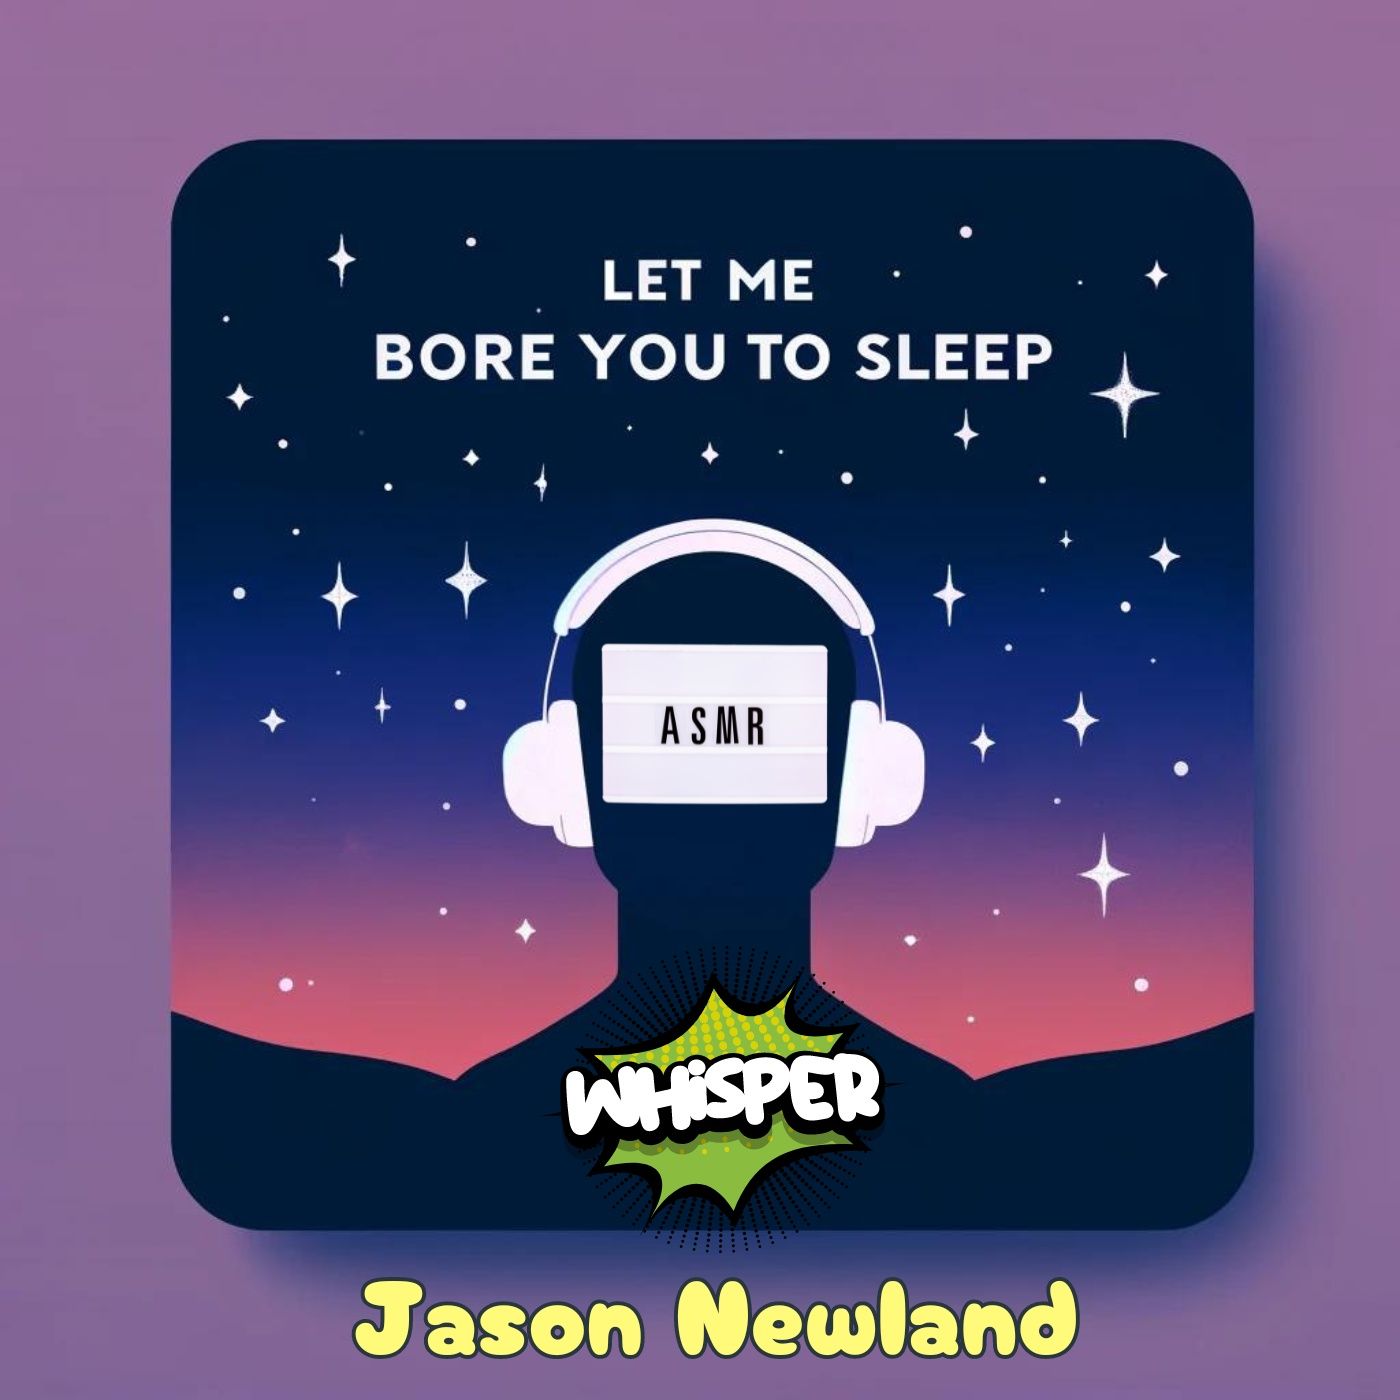 (ASMR/Whisper) Let me bore you to sleep - Jason Newland